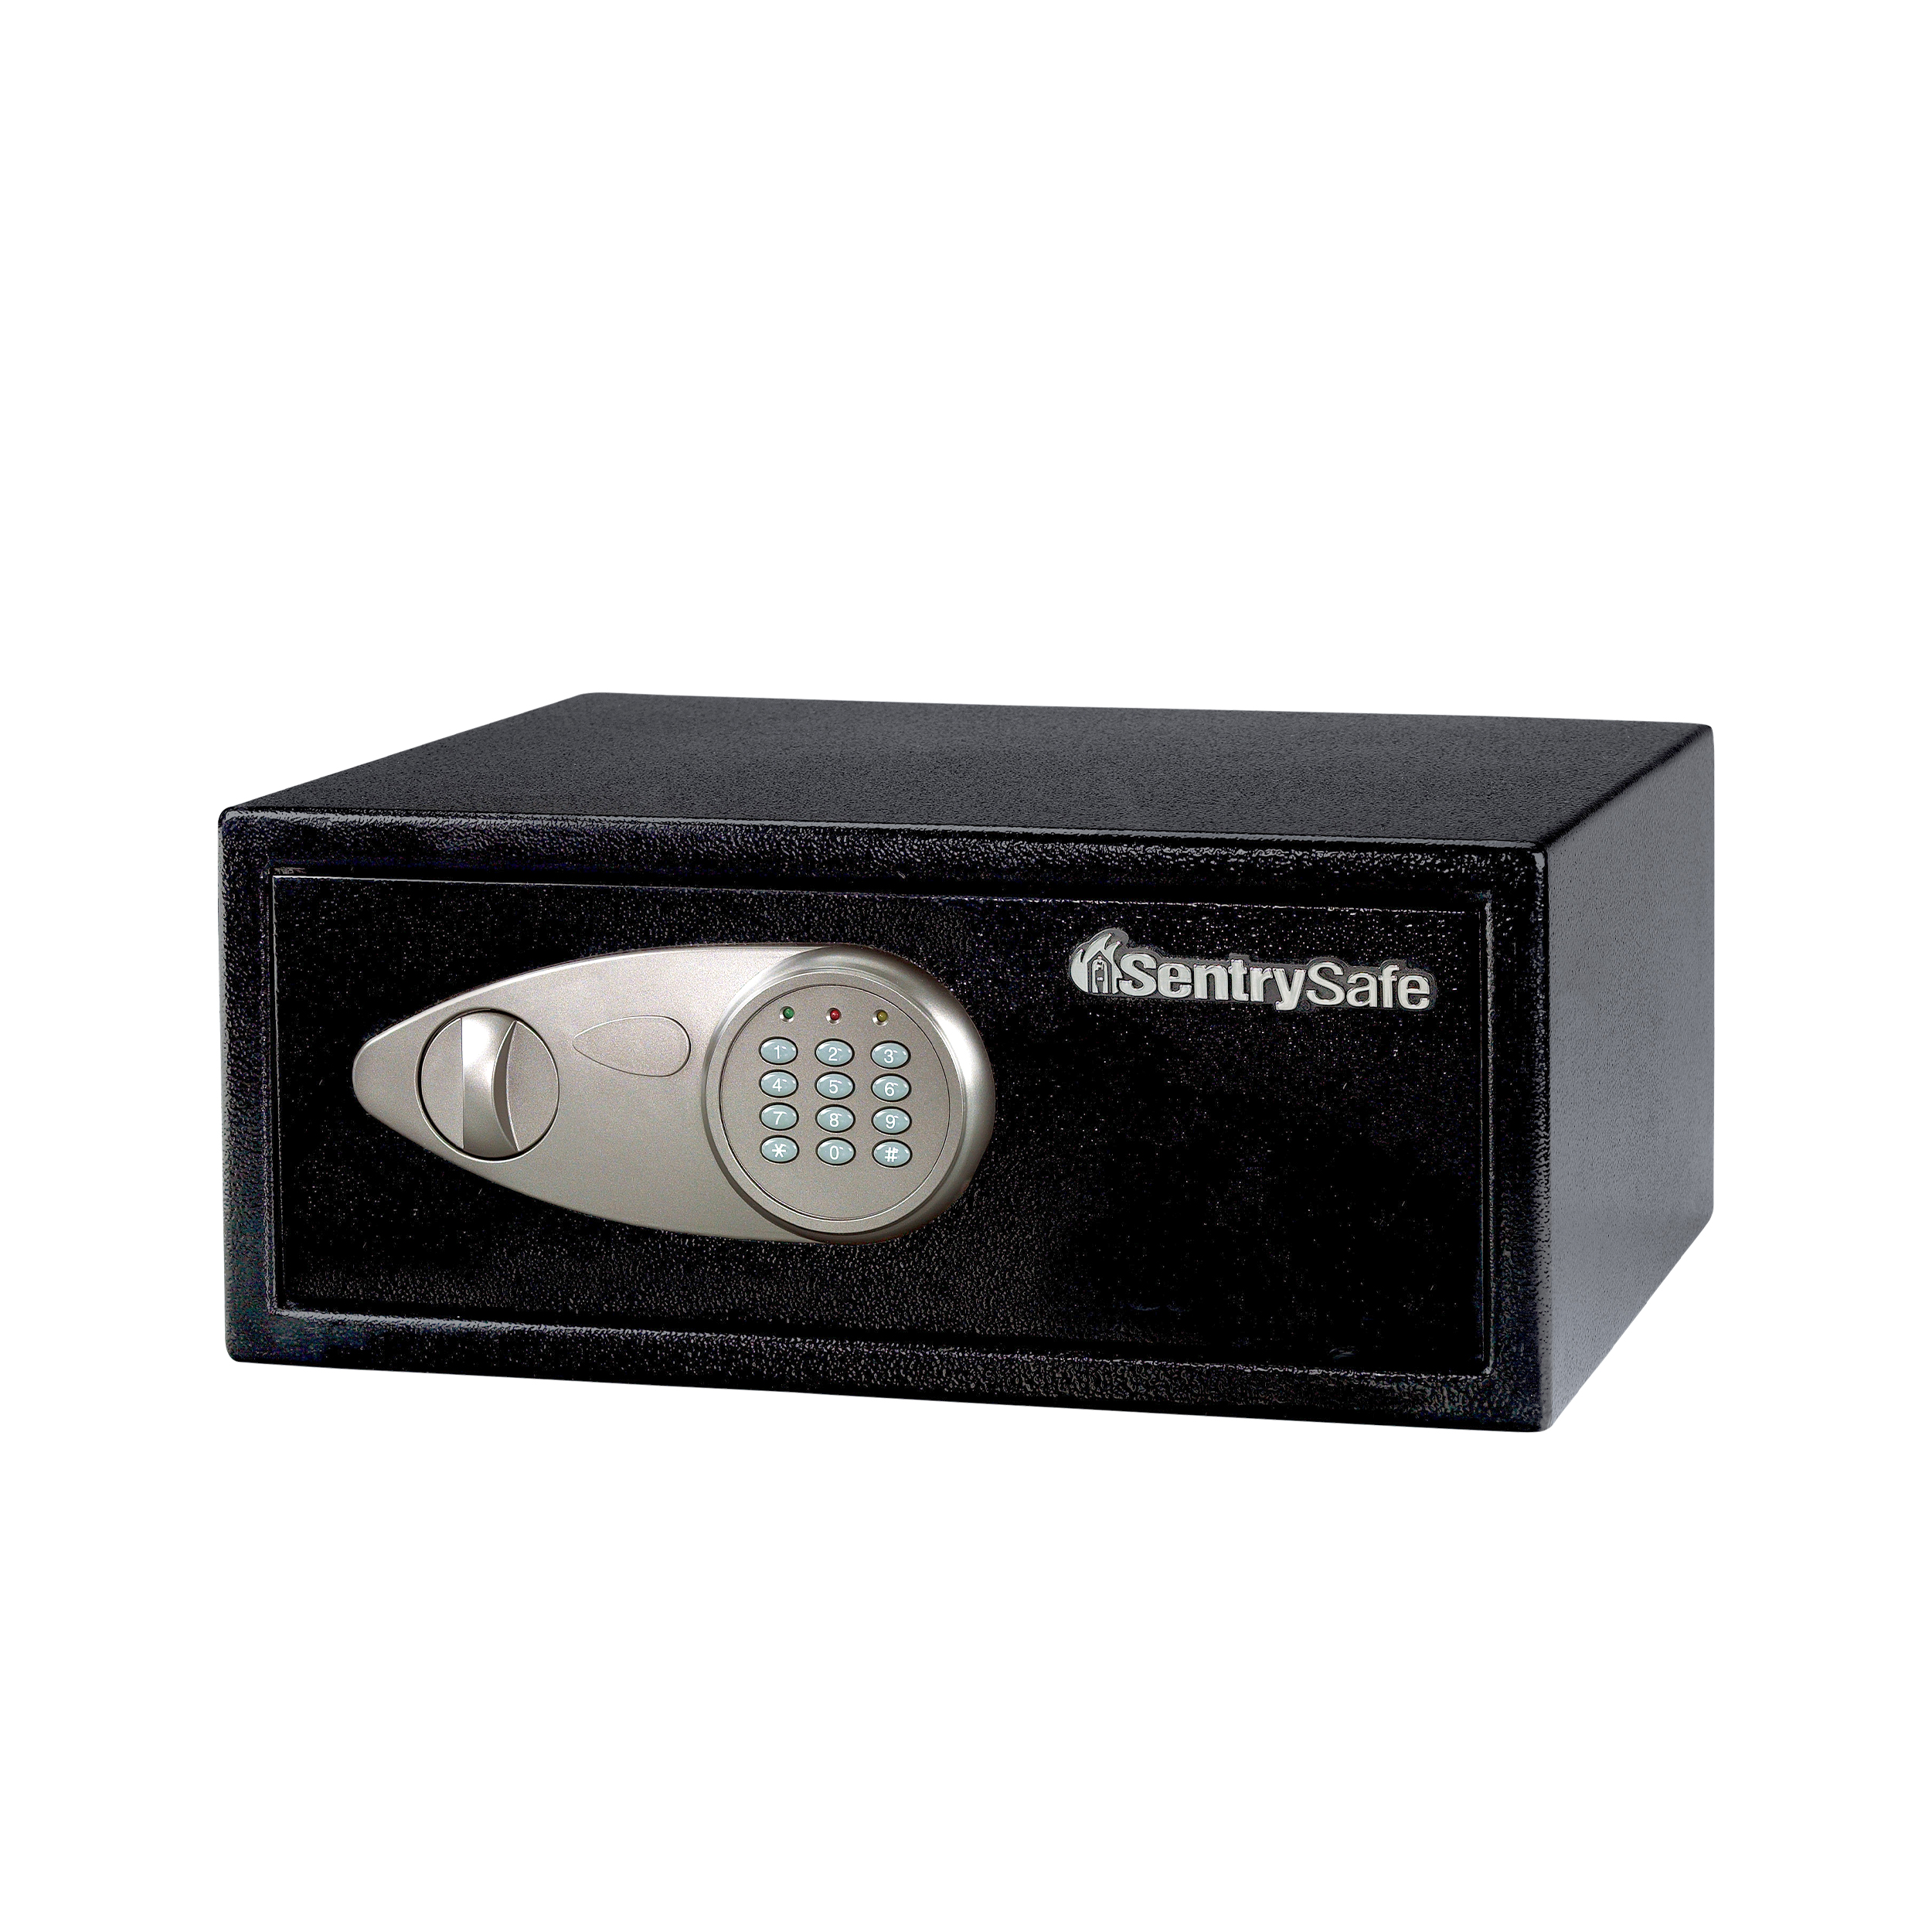 SentrySafe X075 Security Safe with Digital Keypad 0.75 cu. ft. - image 1 of 6